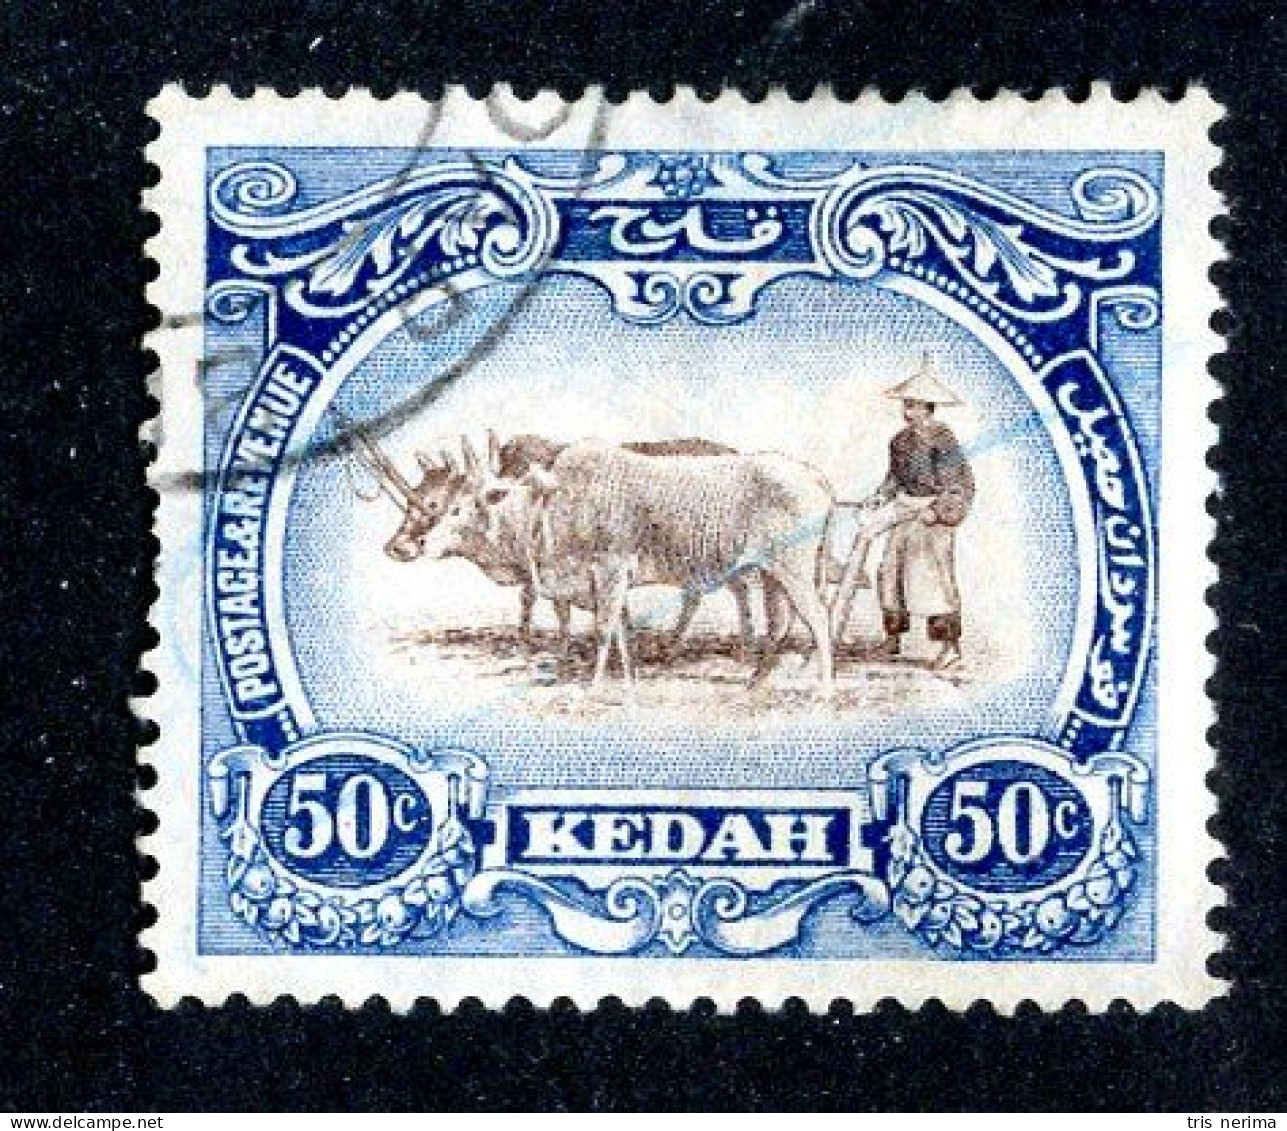 8018 BCXX 1925 Malaysia Scott # 41 Used (offers Welcome) - Kedah